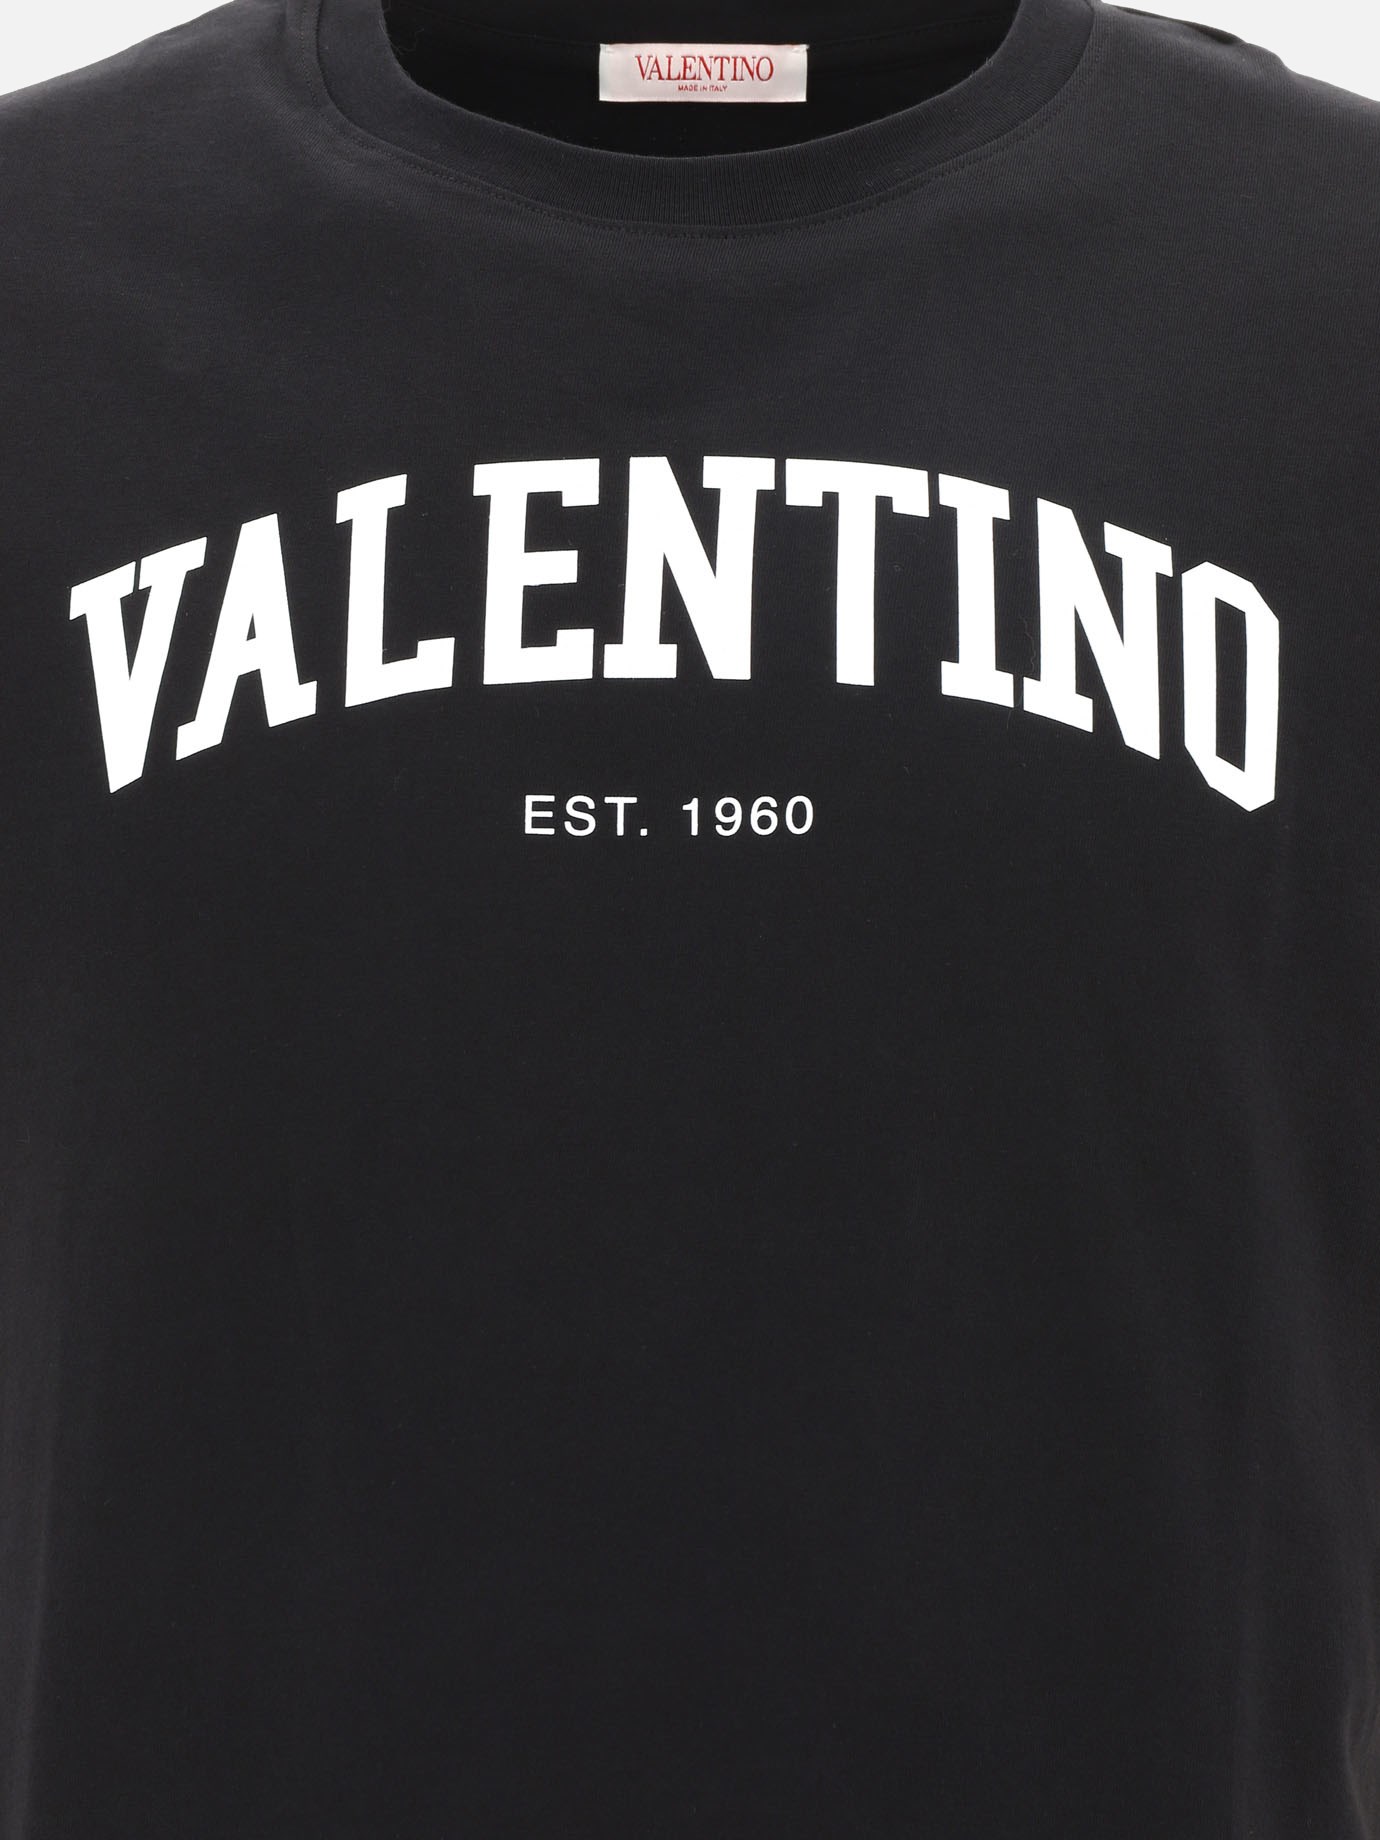 T-shirt  Valentino Est. 1960  by Valentino